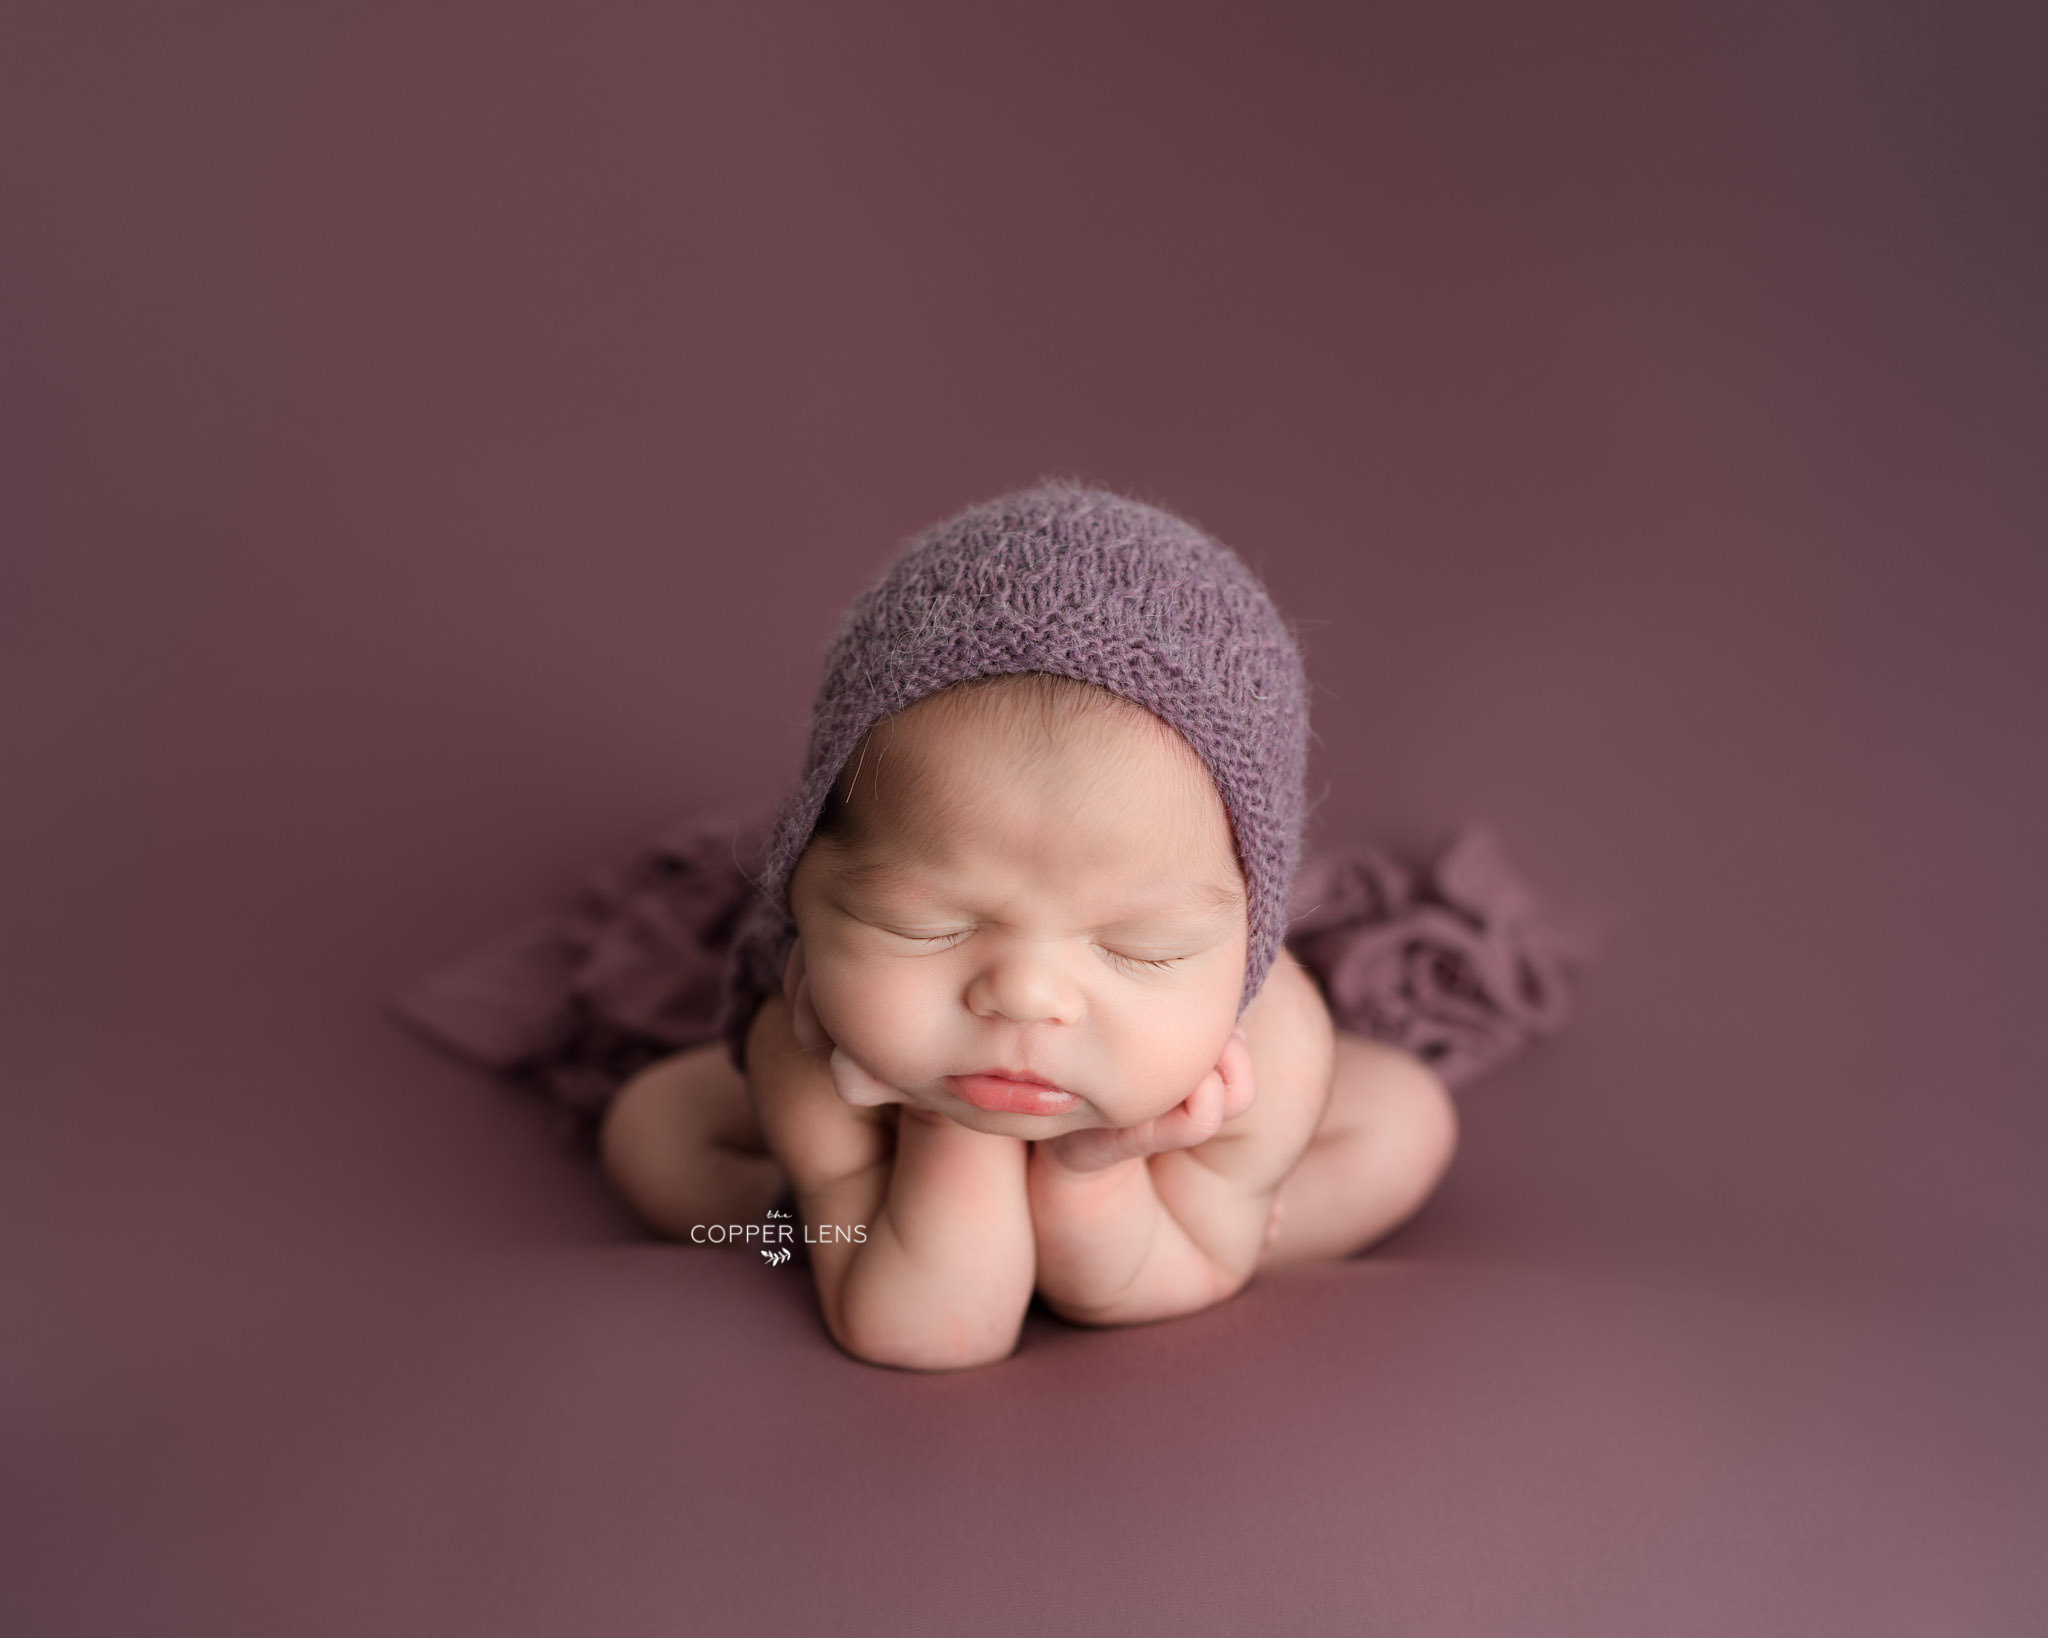 newborn baby sleeping wearing a bonnet at newborn photoshoot Swansea